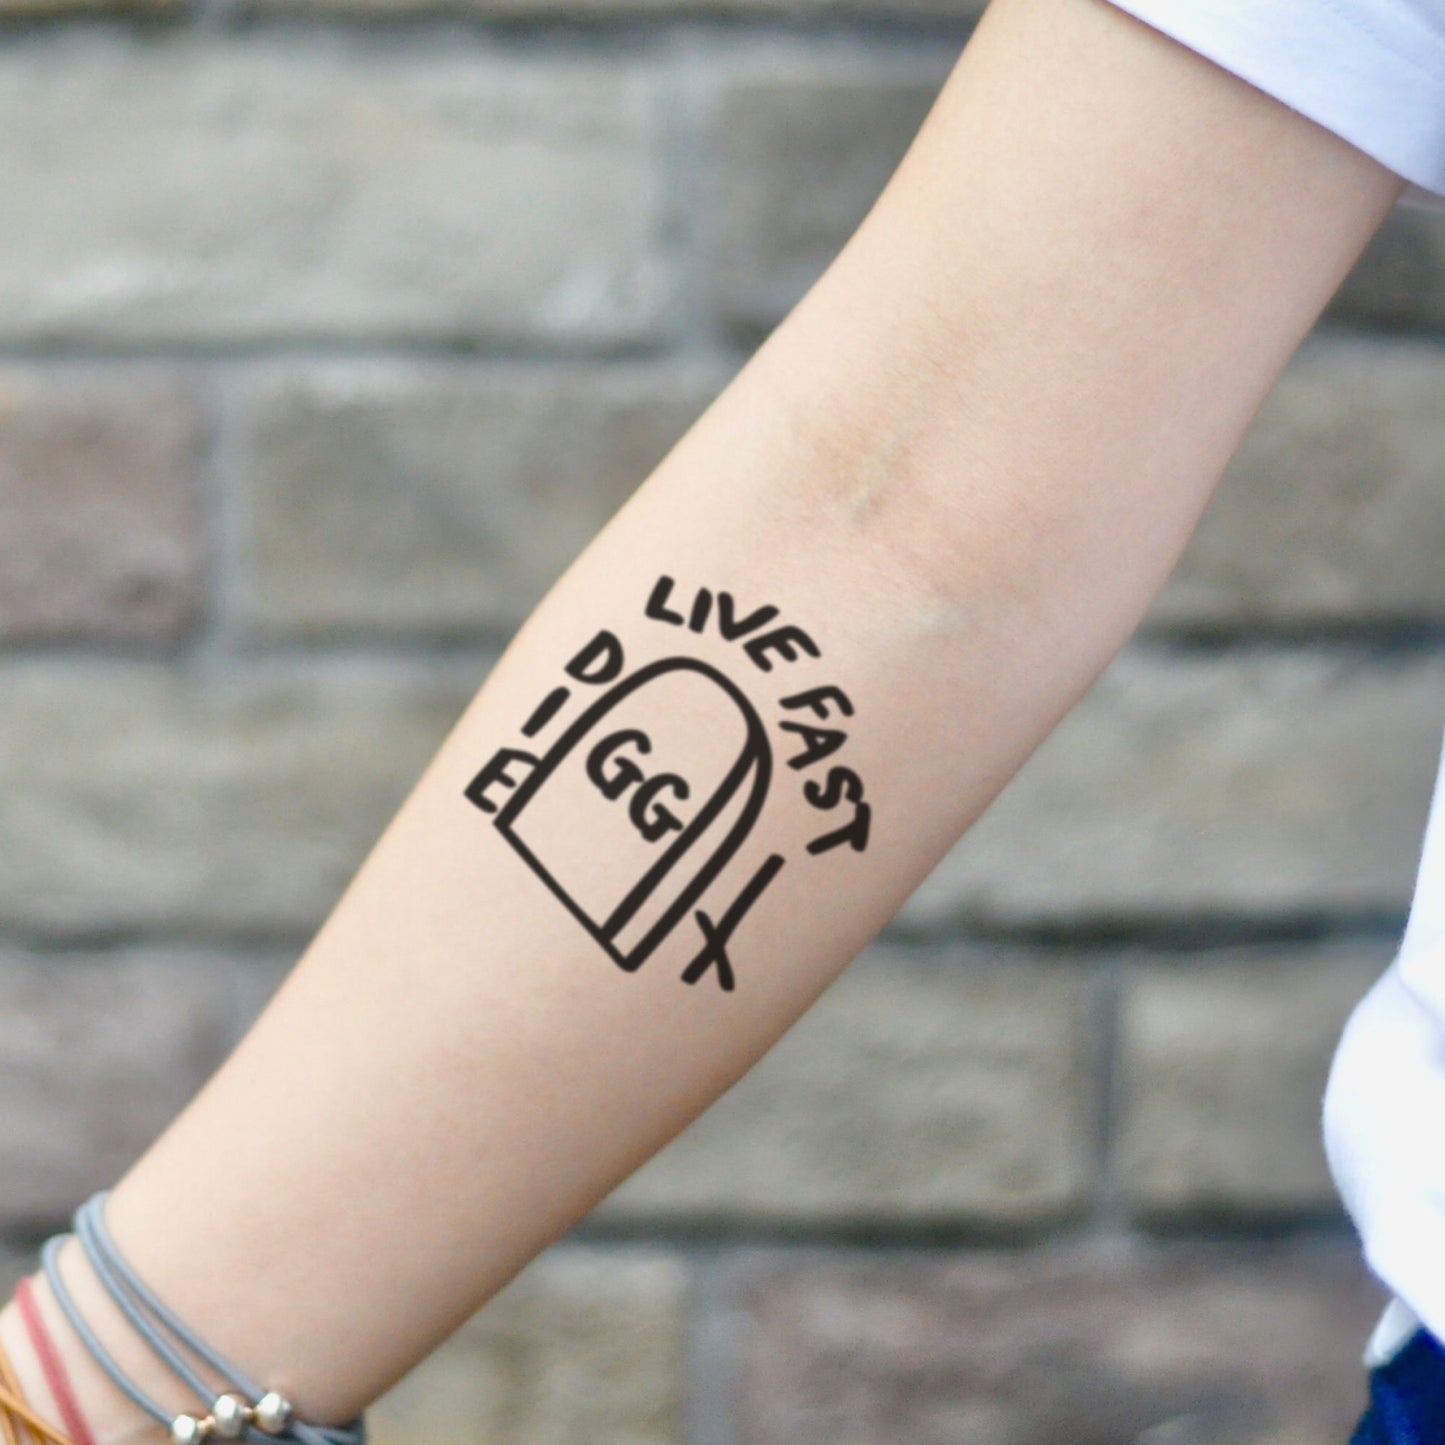 fake small gg allin live fast die illustrative temporary tattoo sticker design idea on inner arm